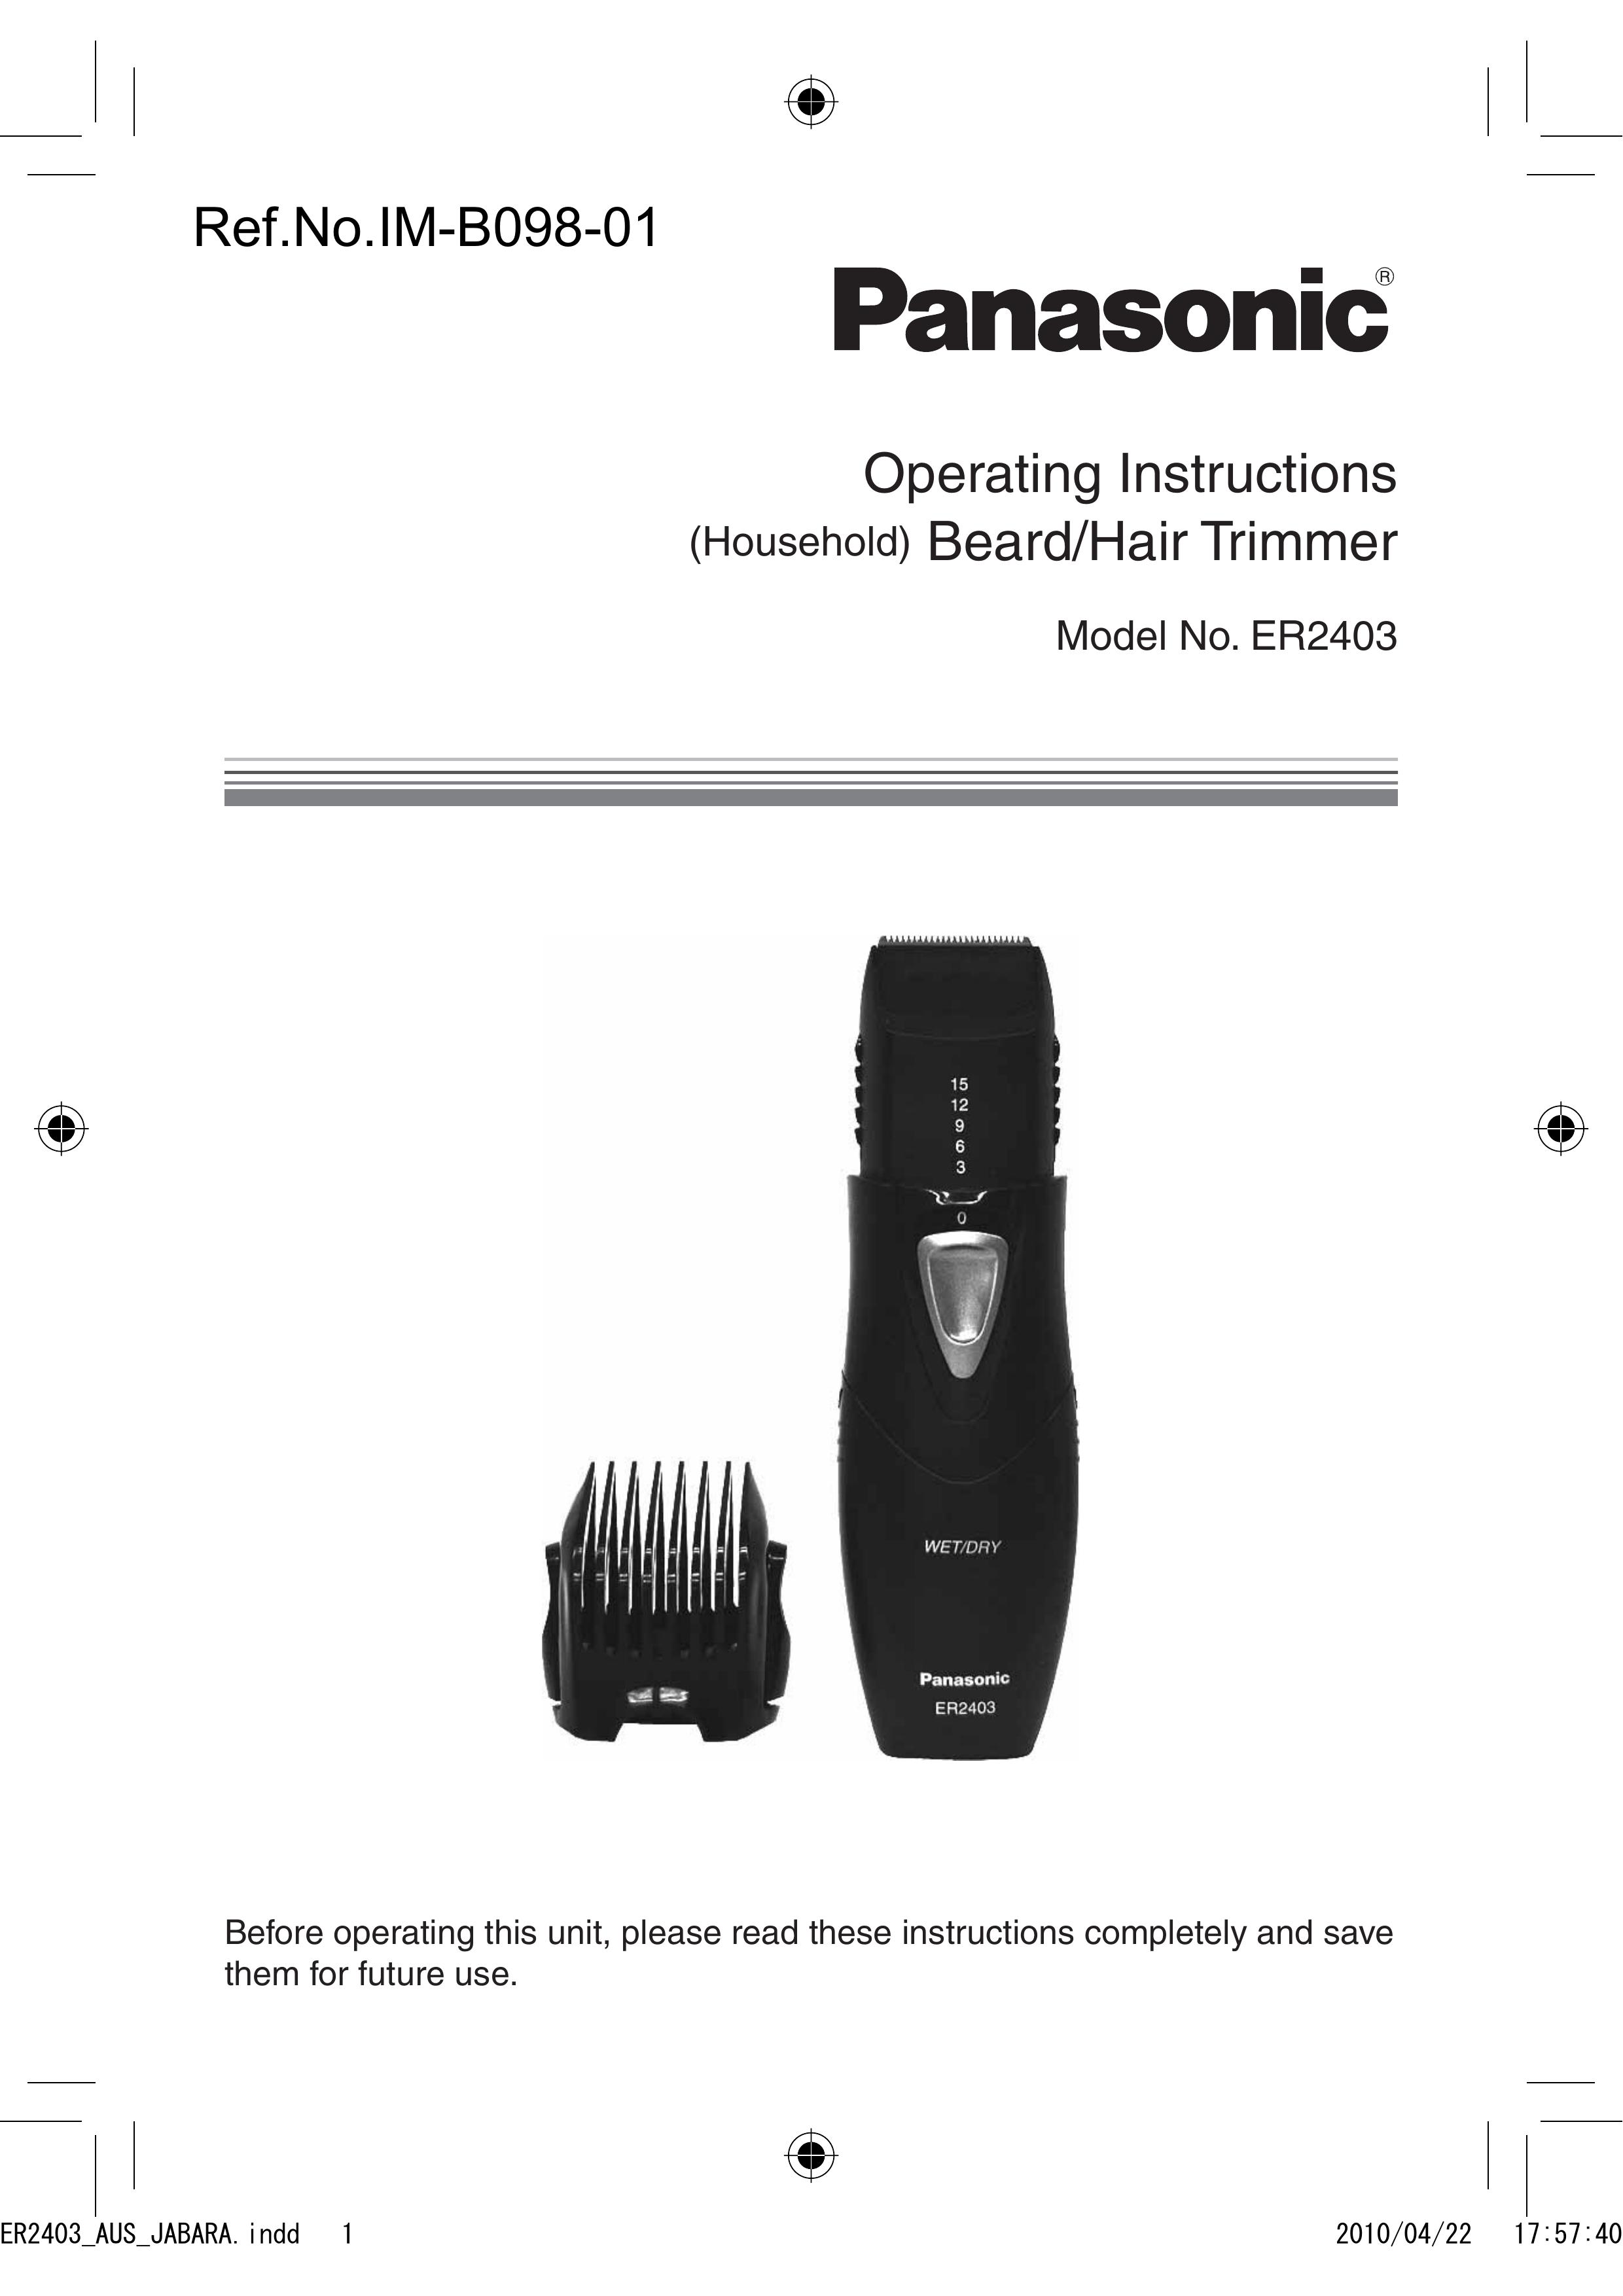 Panasonic ER2403 Electric Shaver User Manual